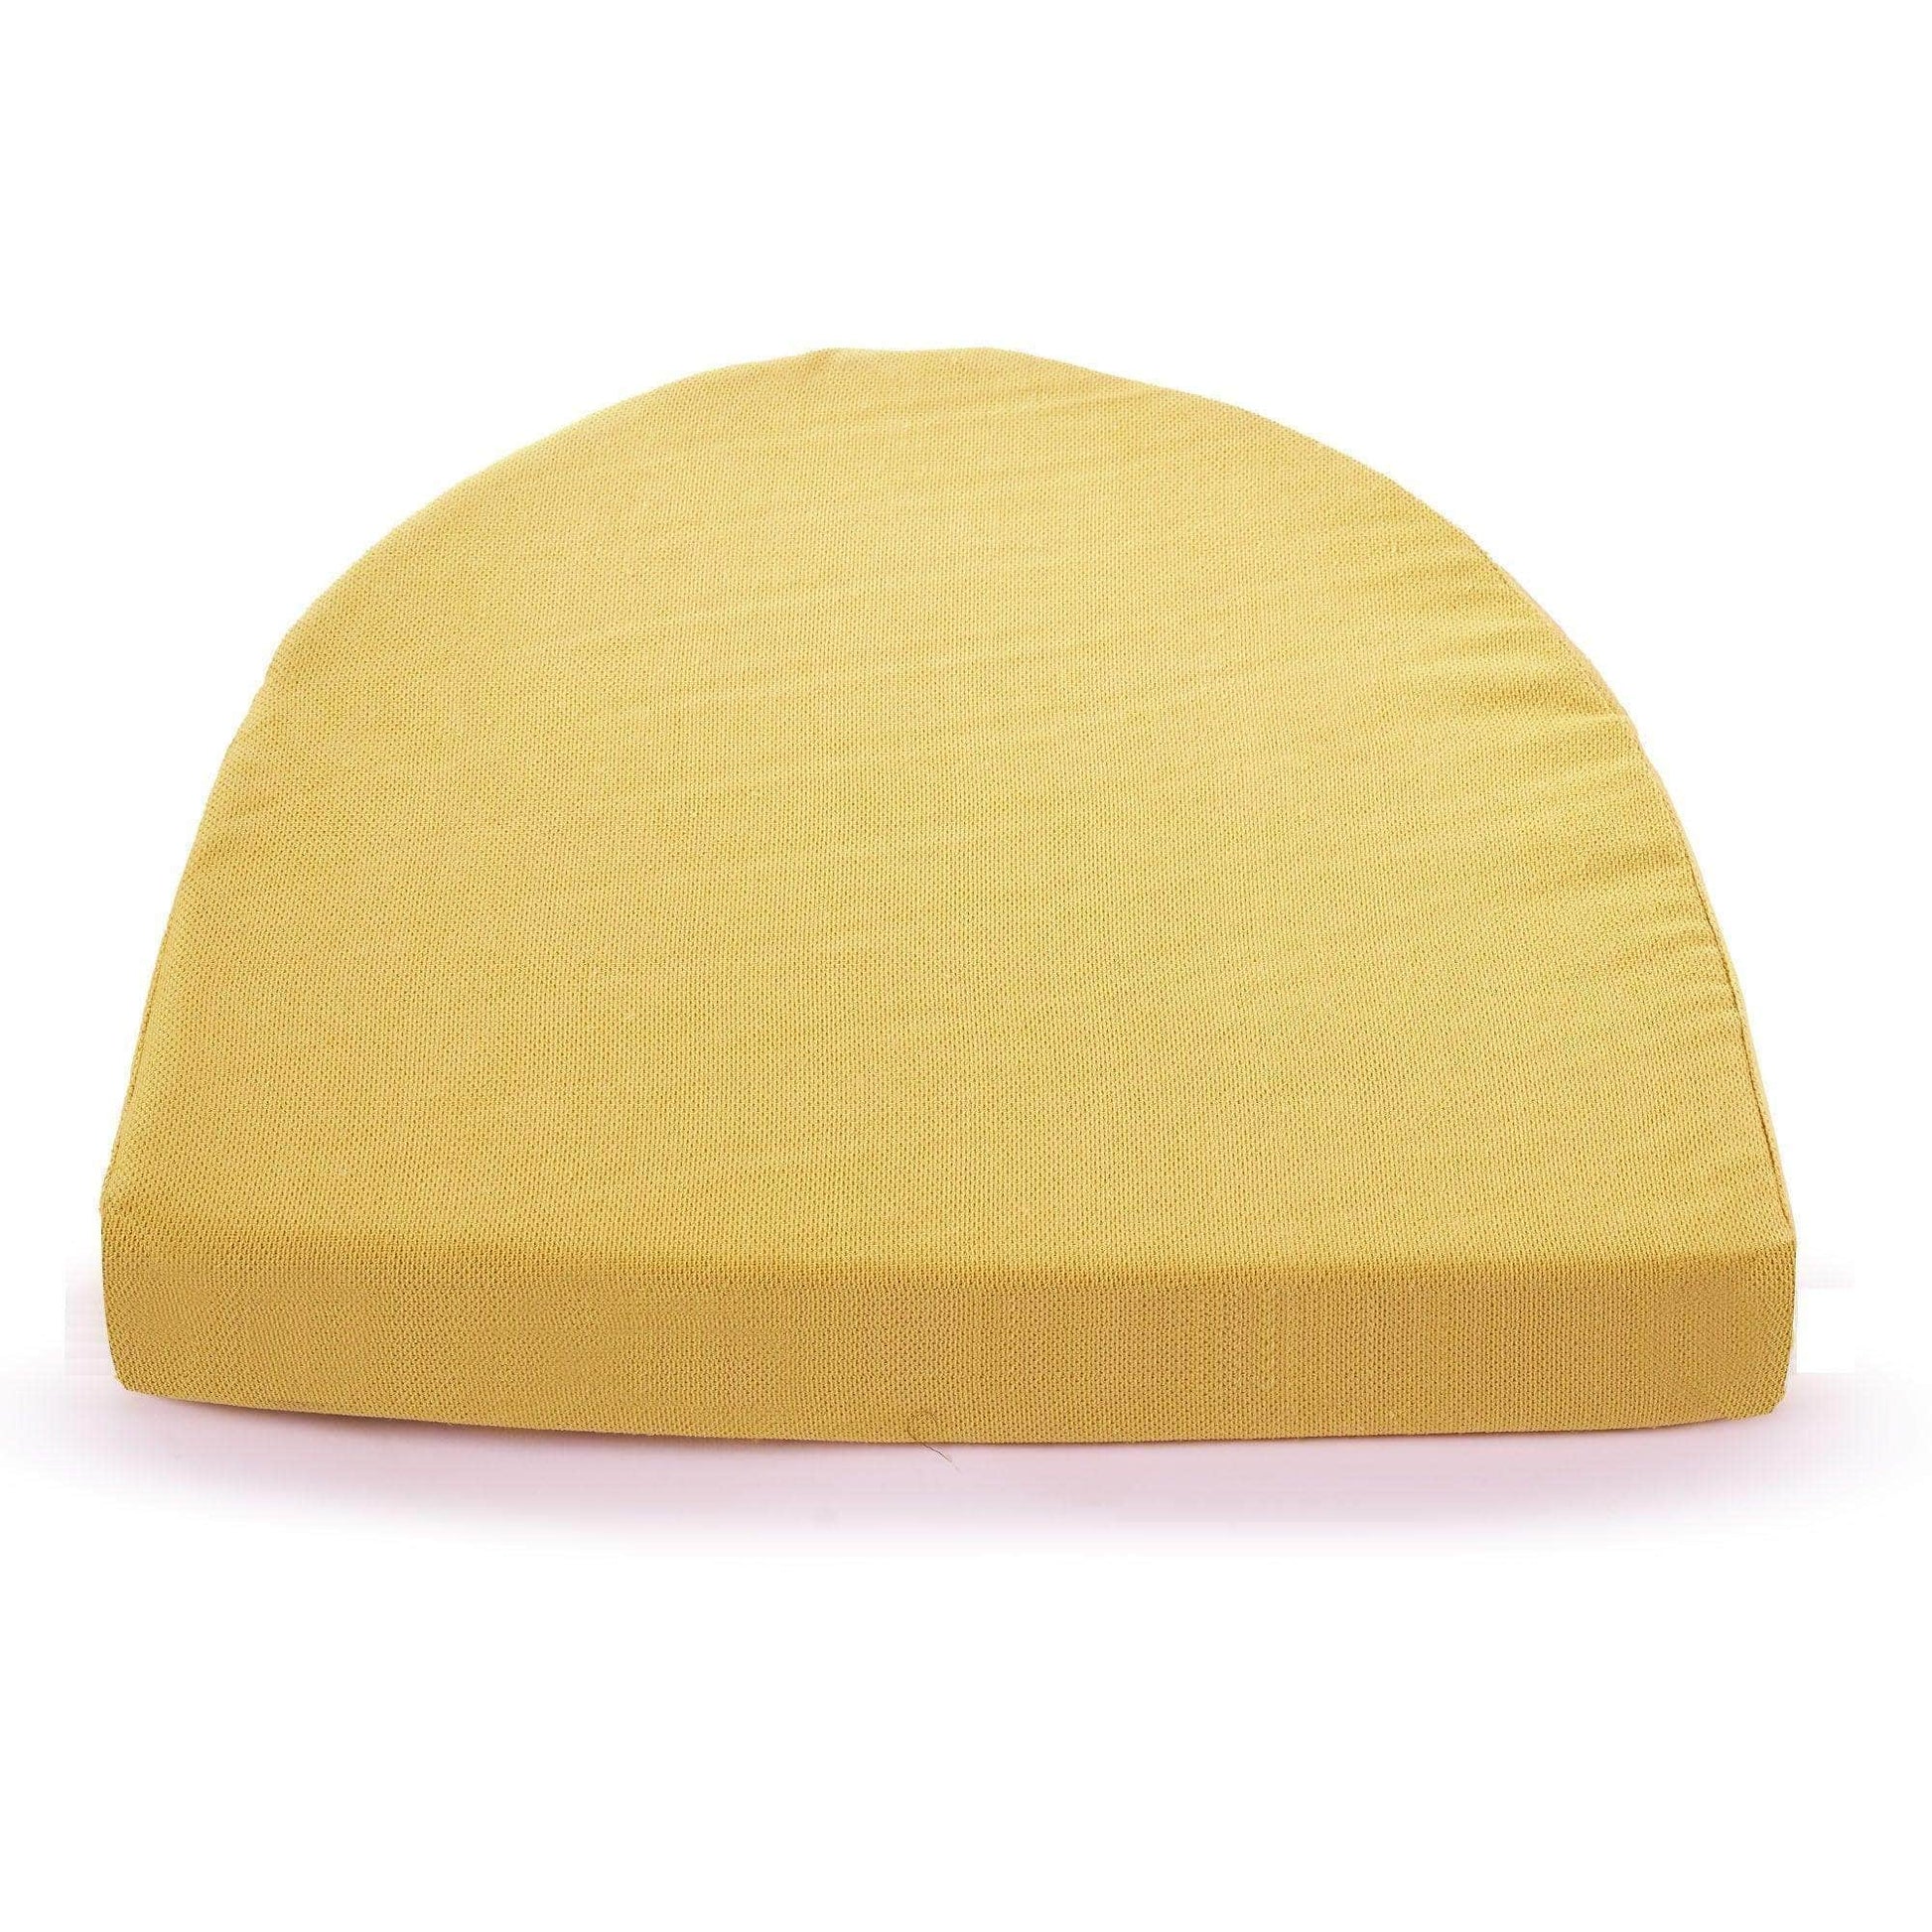 Penguin Group Cushions Yellow Half-Circle Sponge Cushion 44×50×8cm